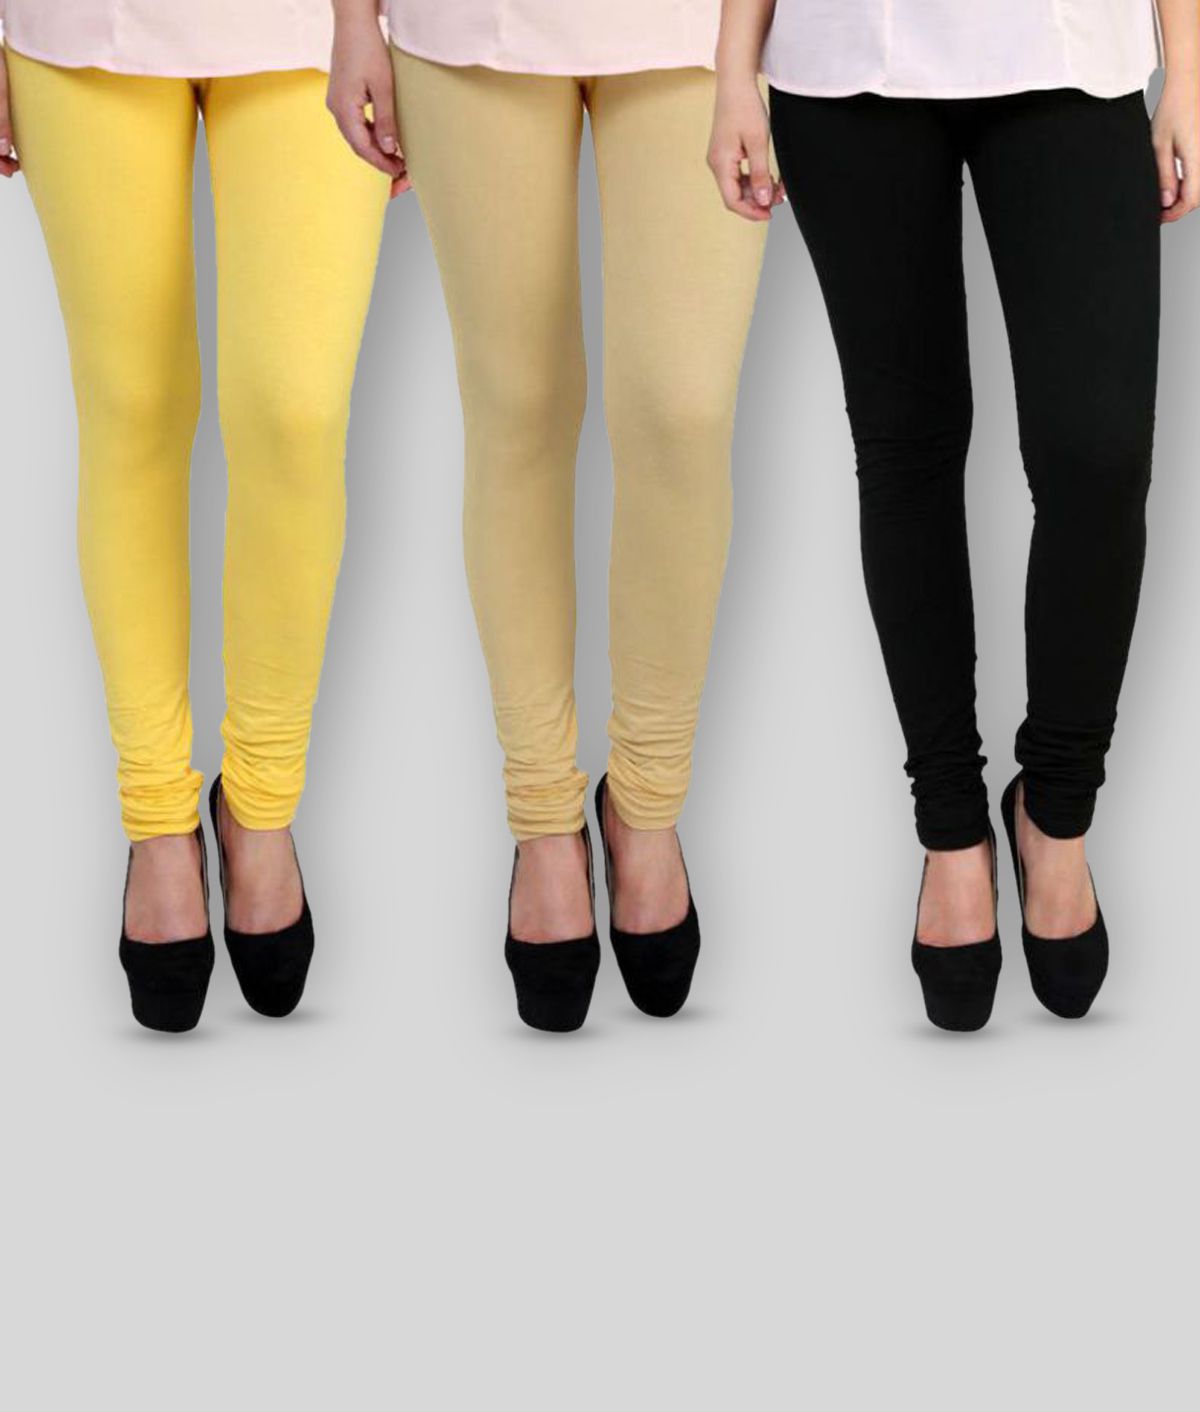     			FnMe - Multicolor Cotton Blend Women's Leggings ( Pack of 3 )